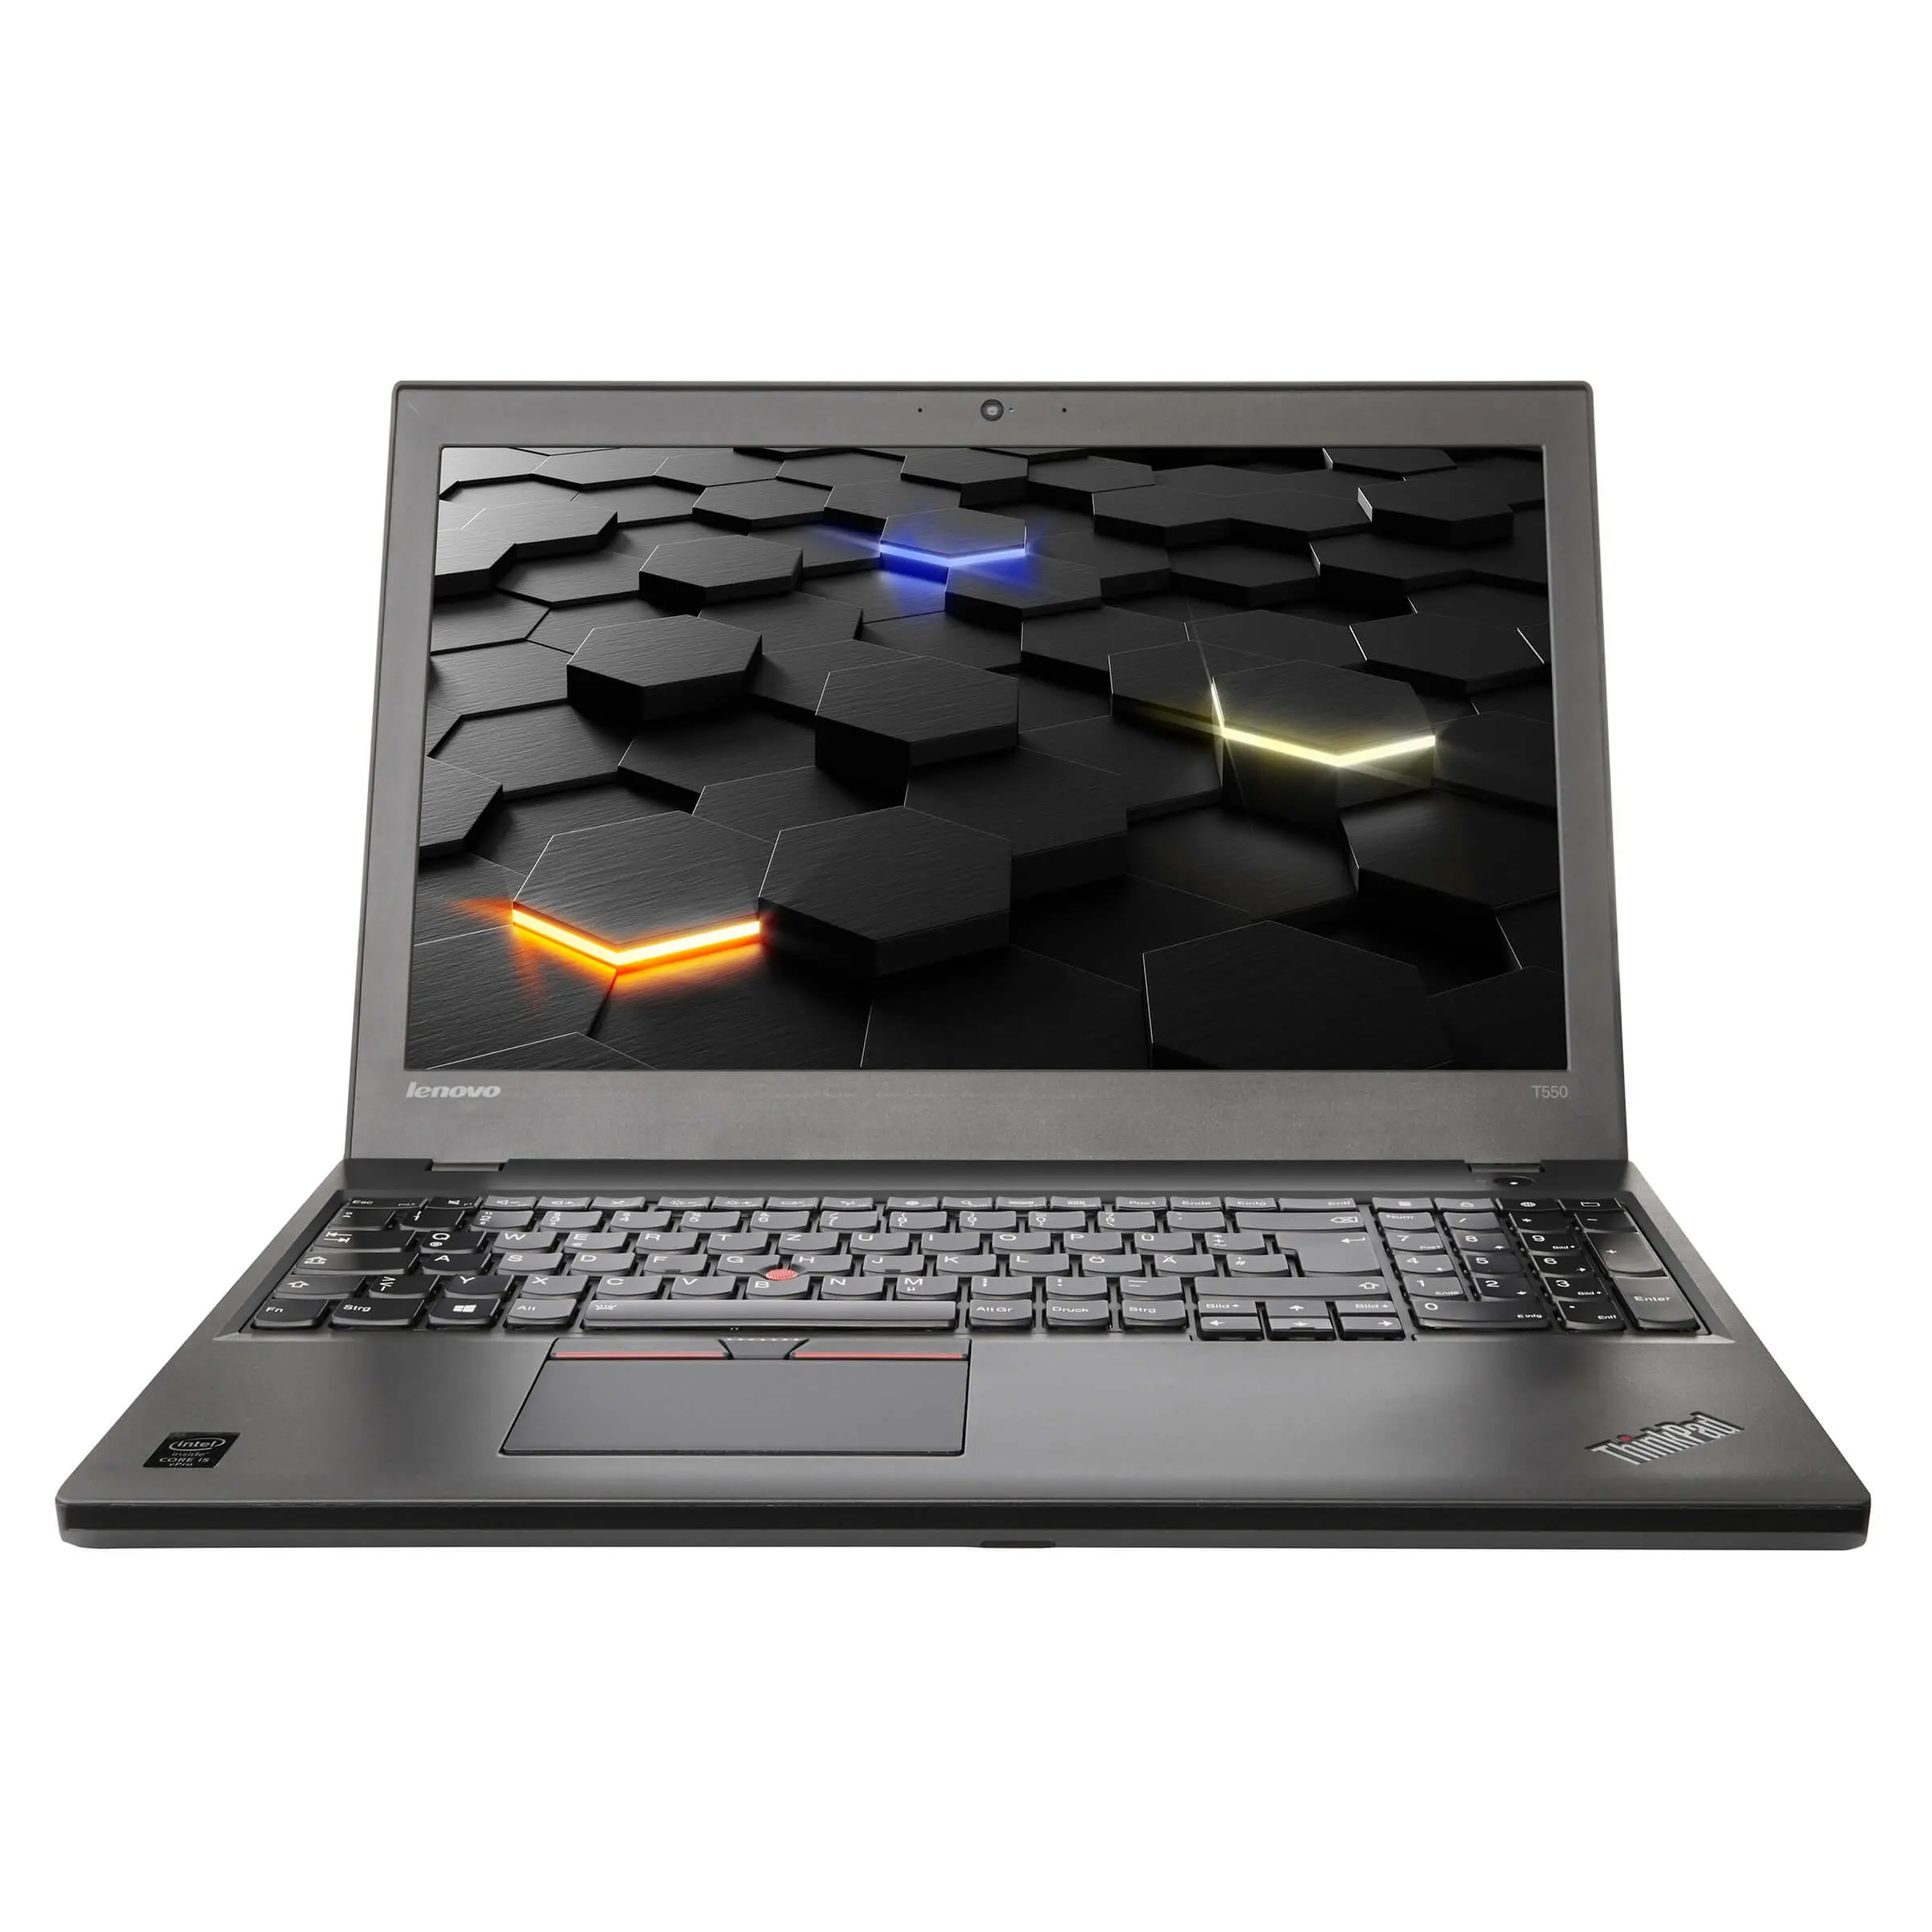 Lenovo ThinkPad T550, i5 (5.Gen), 15.6 Zoll, FHD, IPS, 8GB, 250GB SSD, Webcam, beleuchtete Tastatur, Windows 10 Pro